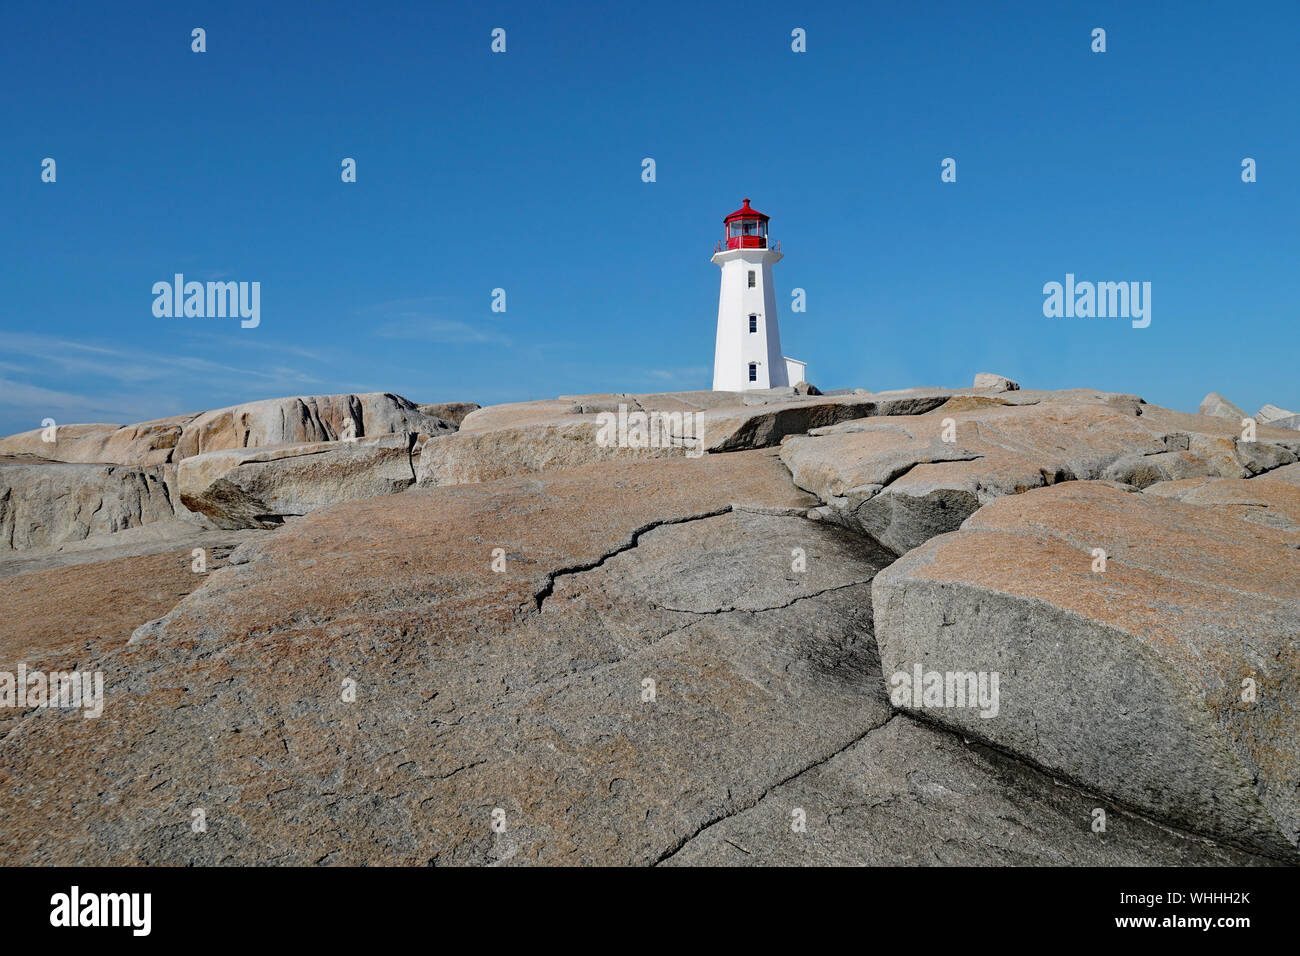 Peggy's Cove, Nova Scotia, Lighthouse on top of massive rocks Stock Photo